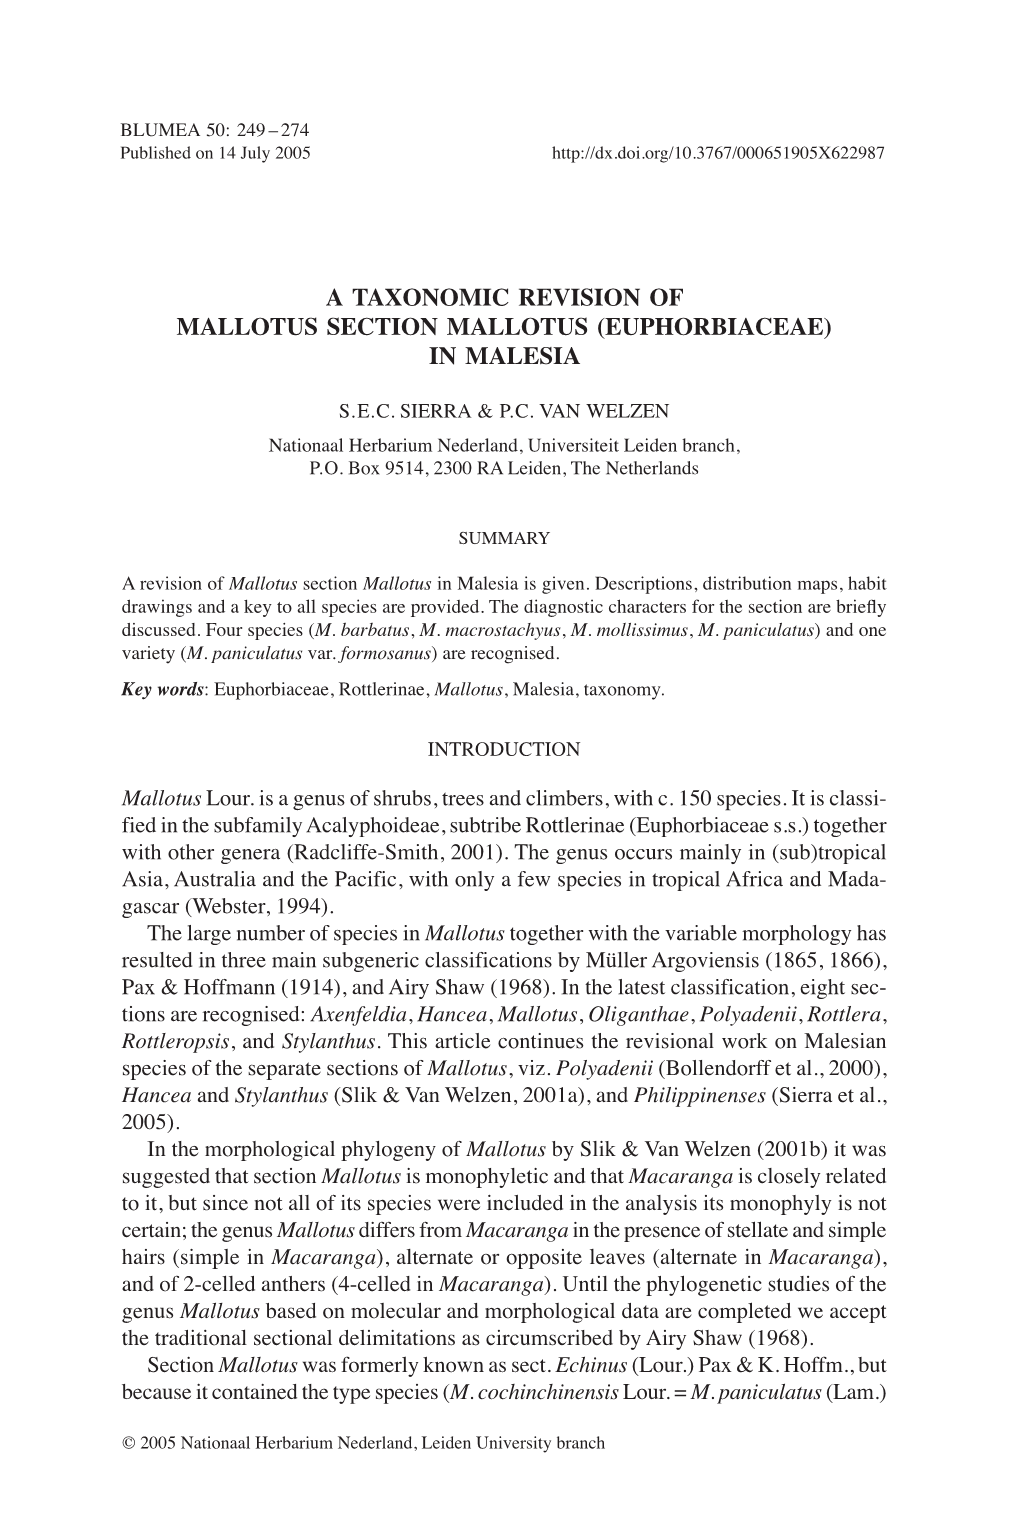 A TAXONOMIC Revision of Mallotus SECTION MALLOTUS (Euphorbiaceae) in MALESIA